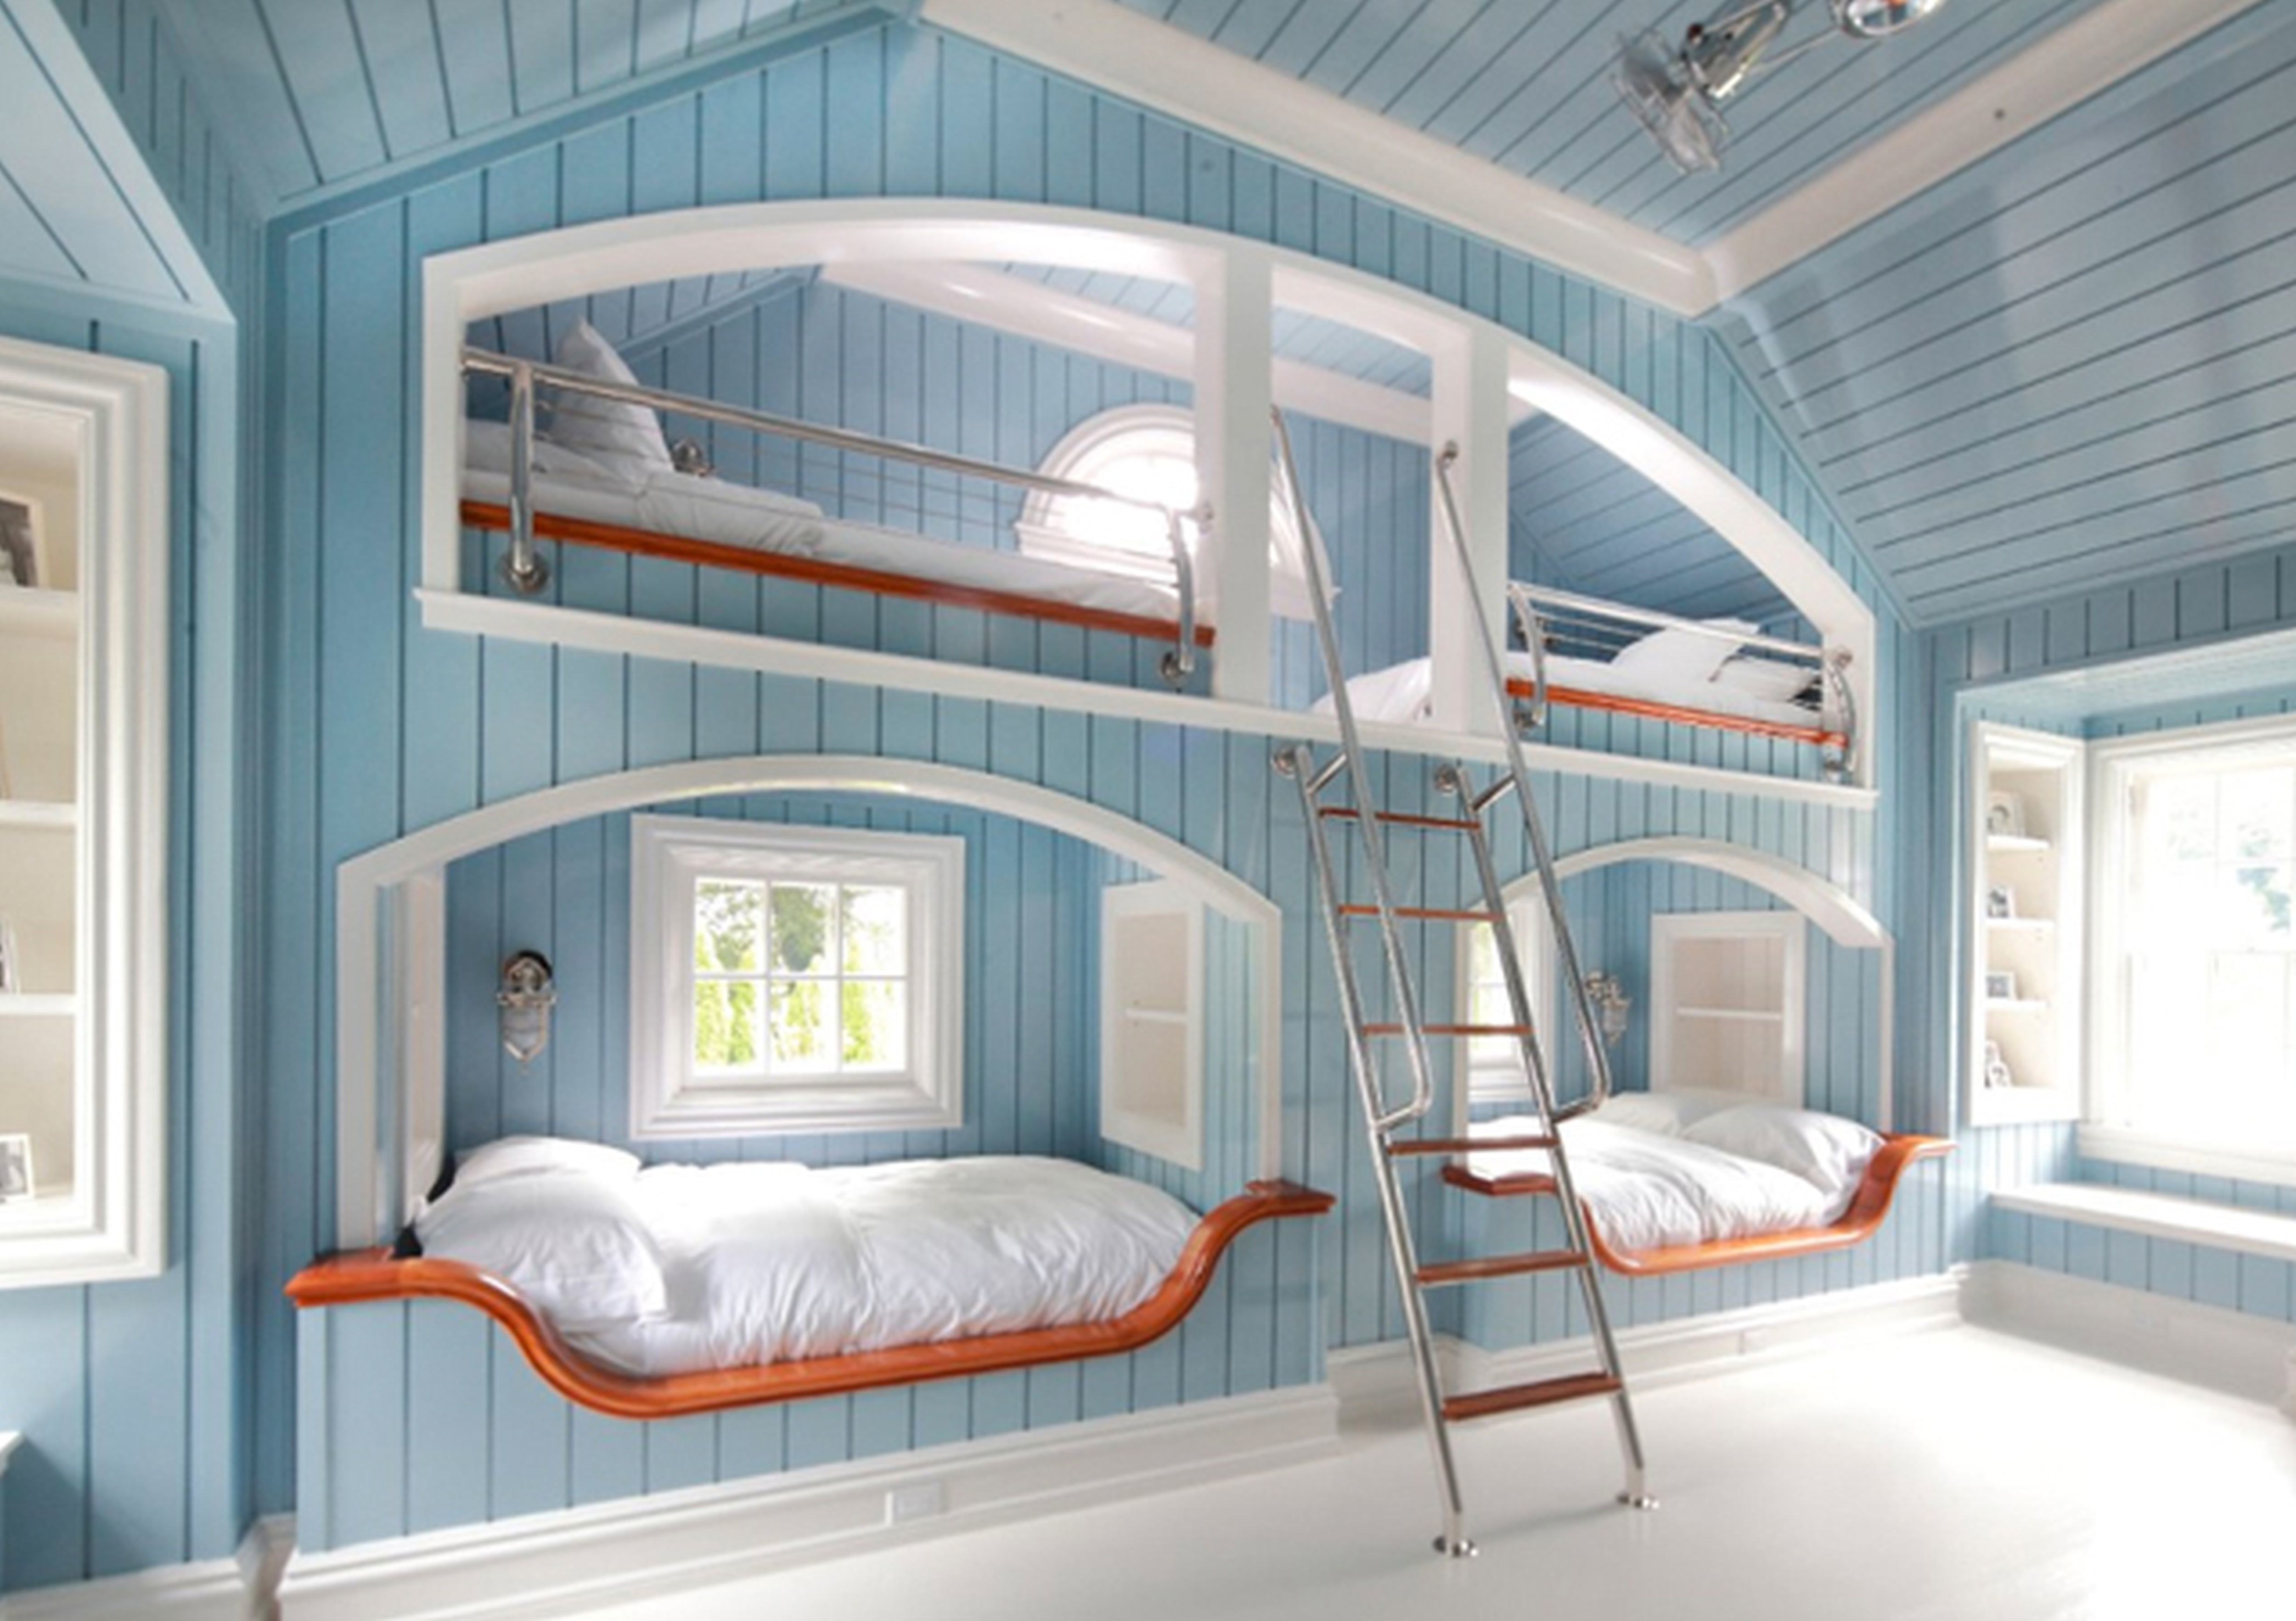 Комнаты другого этажа. Необычные двухъярусные кровати. Необычный интерьер комнаты. Необычные двухэтажные кровати. Необычные детские комнаты.